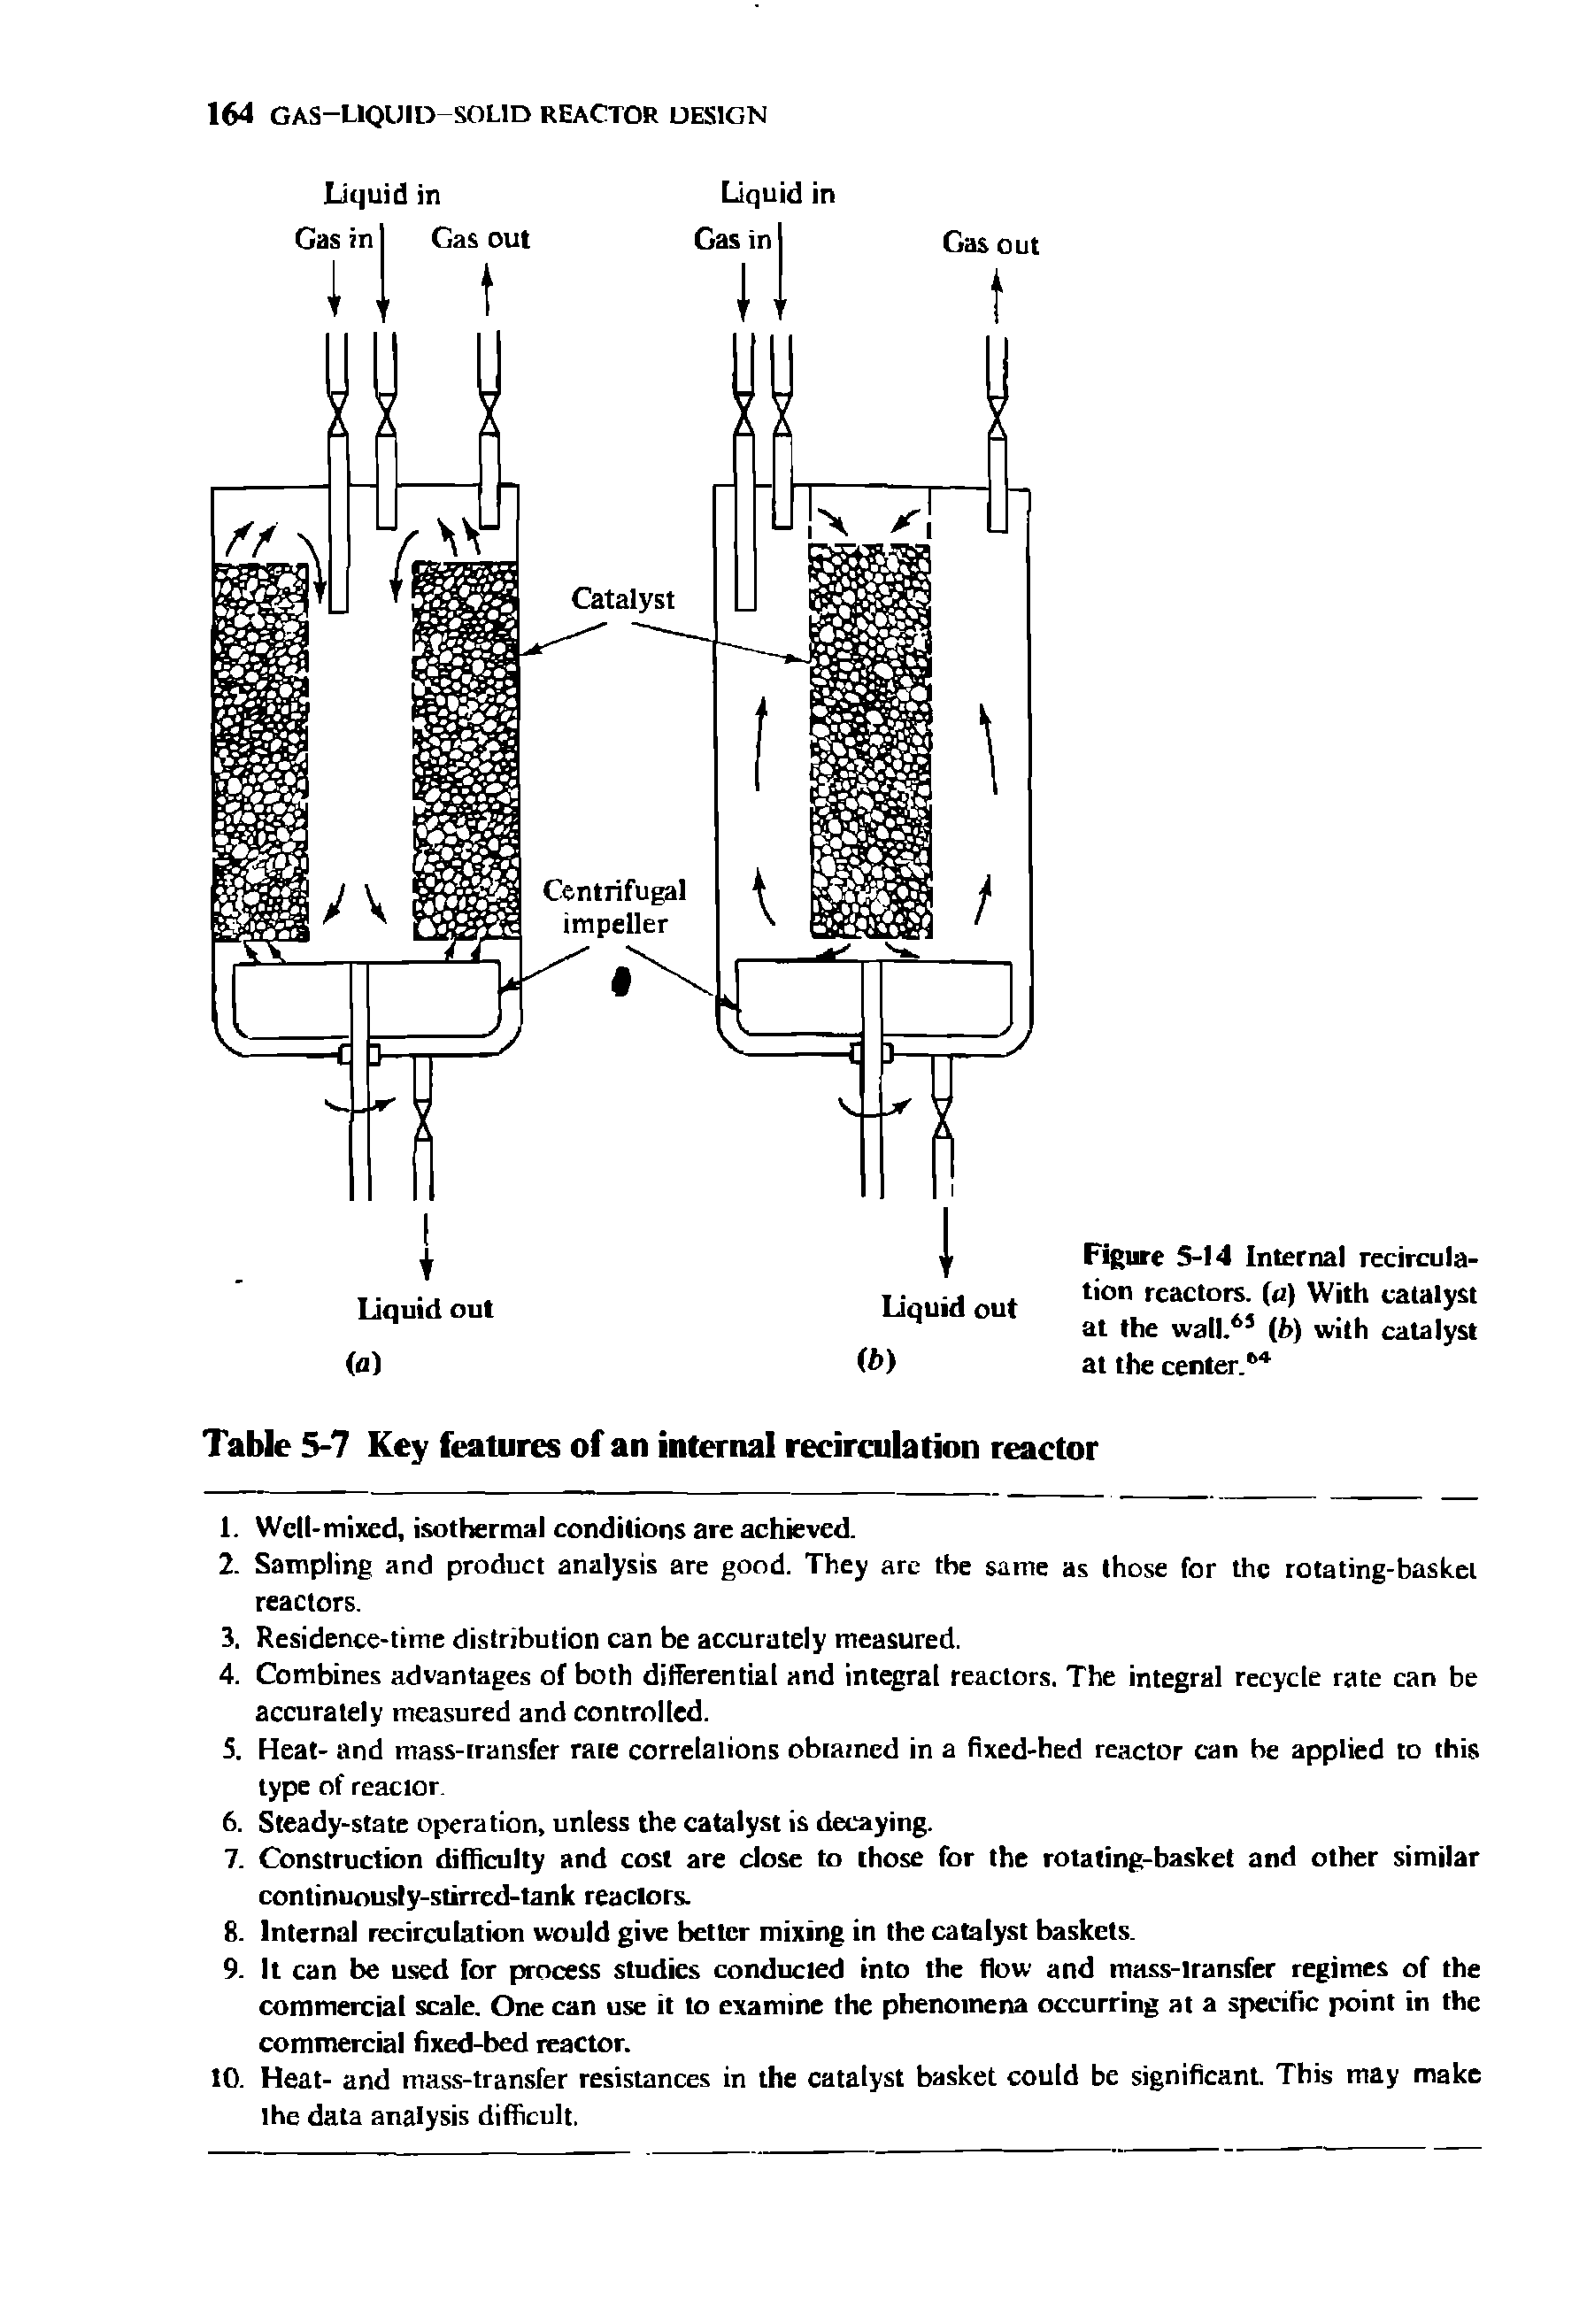 Figure 5-14 Internal recirculation reactors, (o) With catalyst at the wall.65 (b) with catalyst at the center.64...